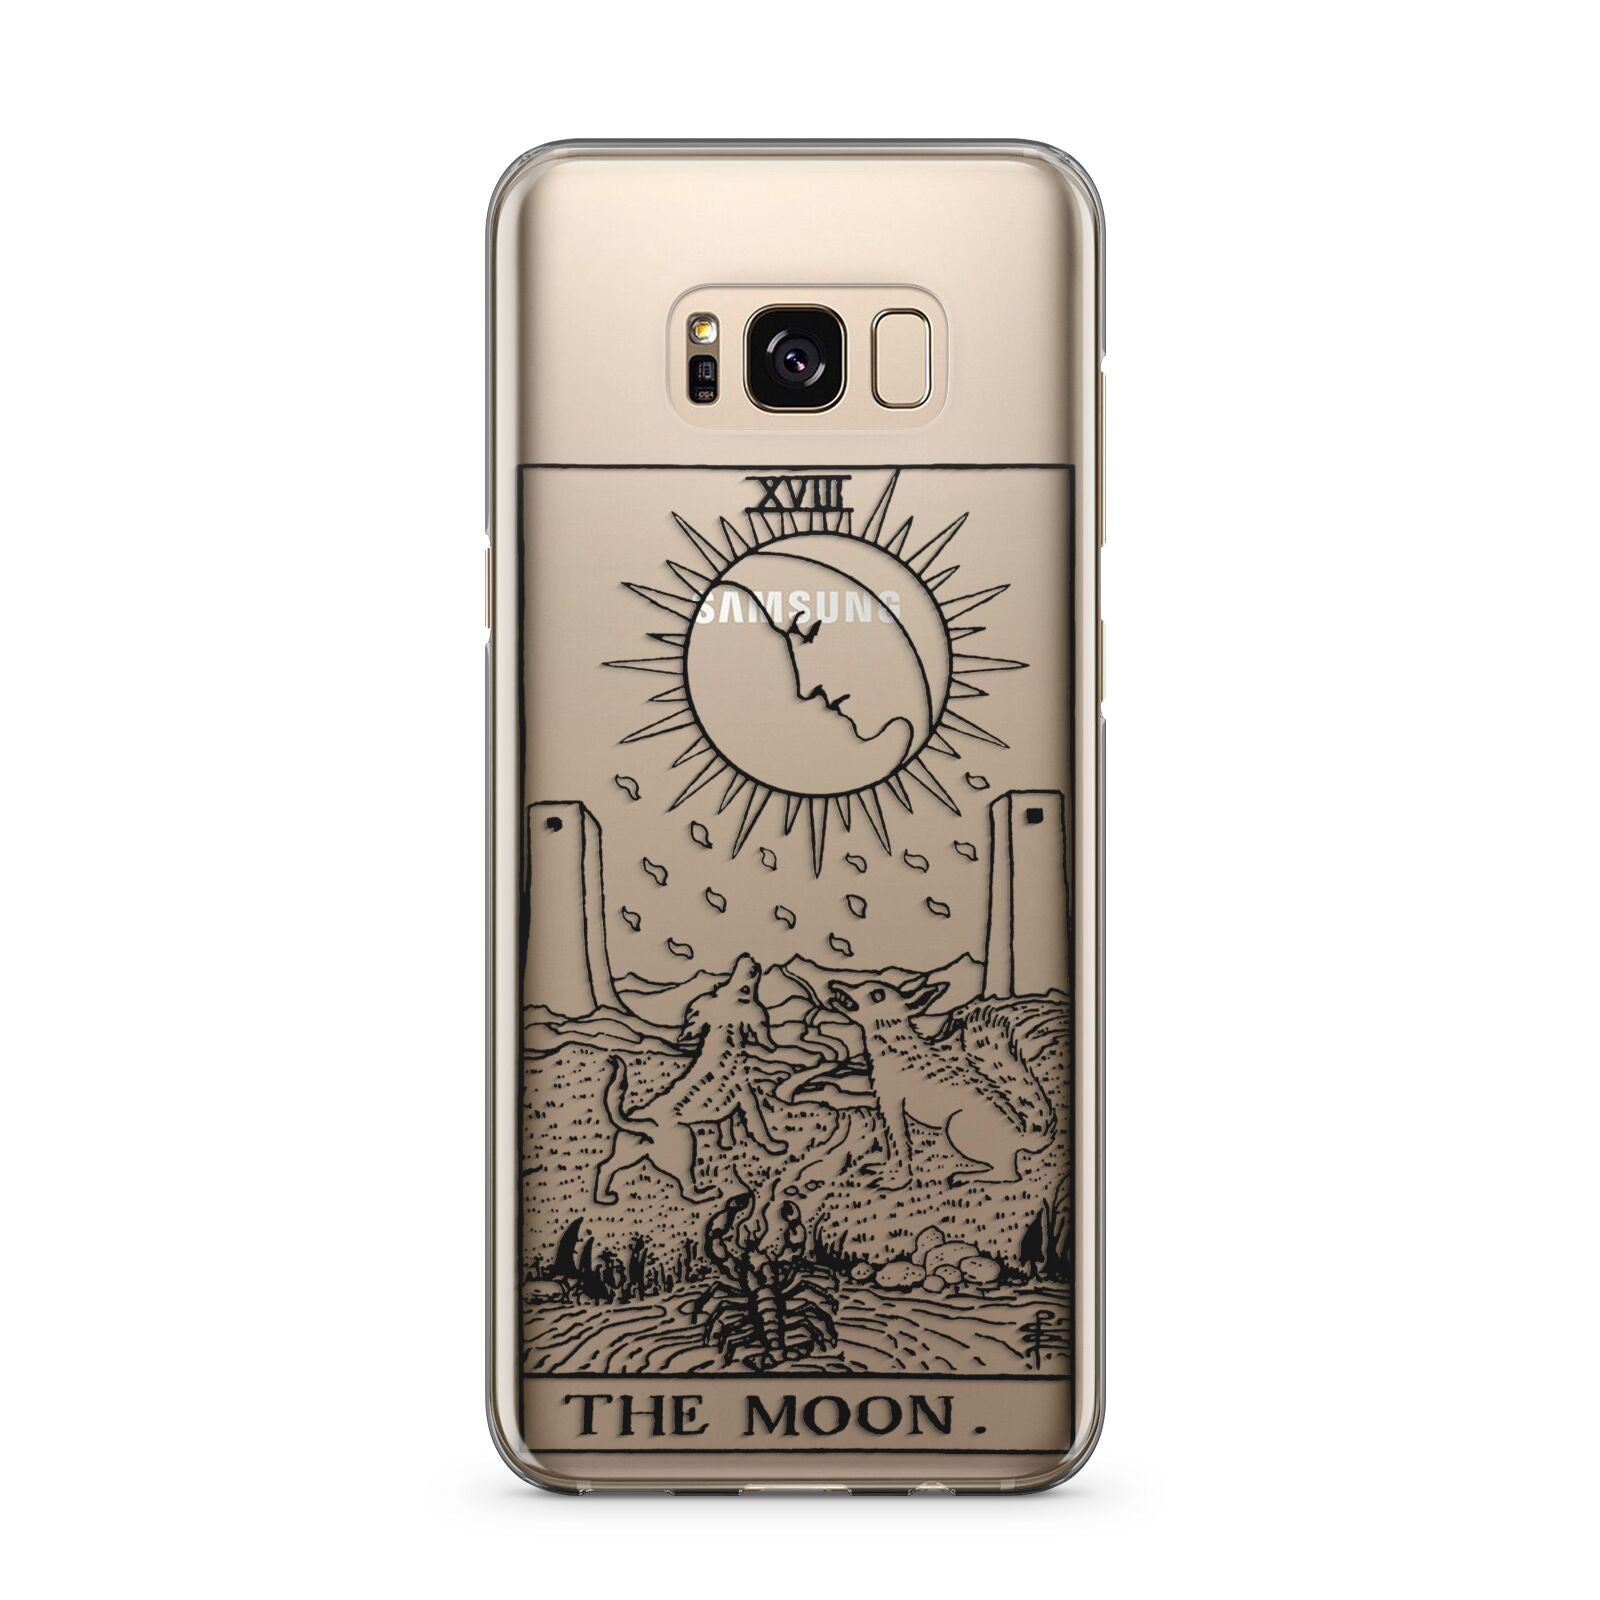 The Moon Monochrome Samsung Galaxy S8 Plus Case